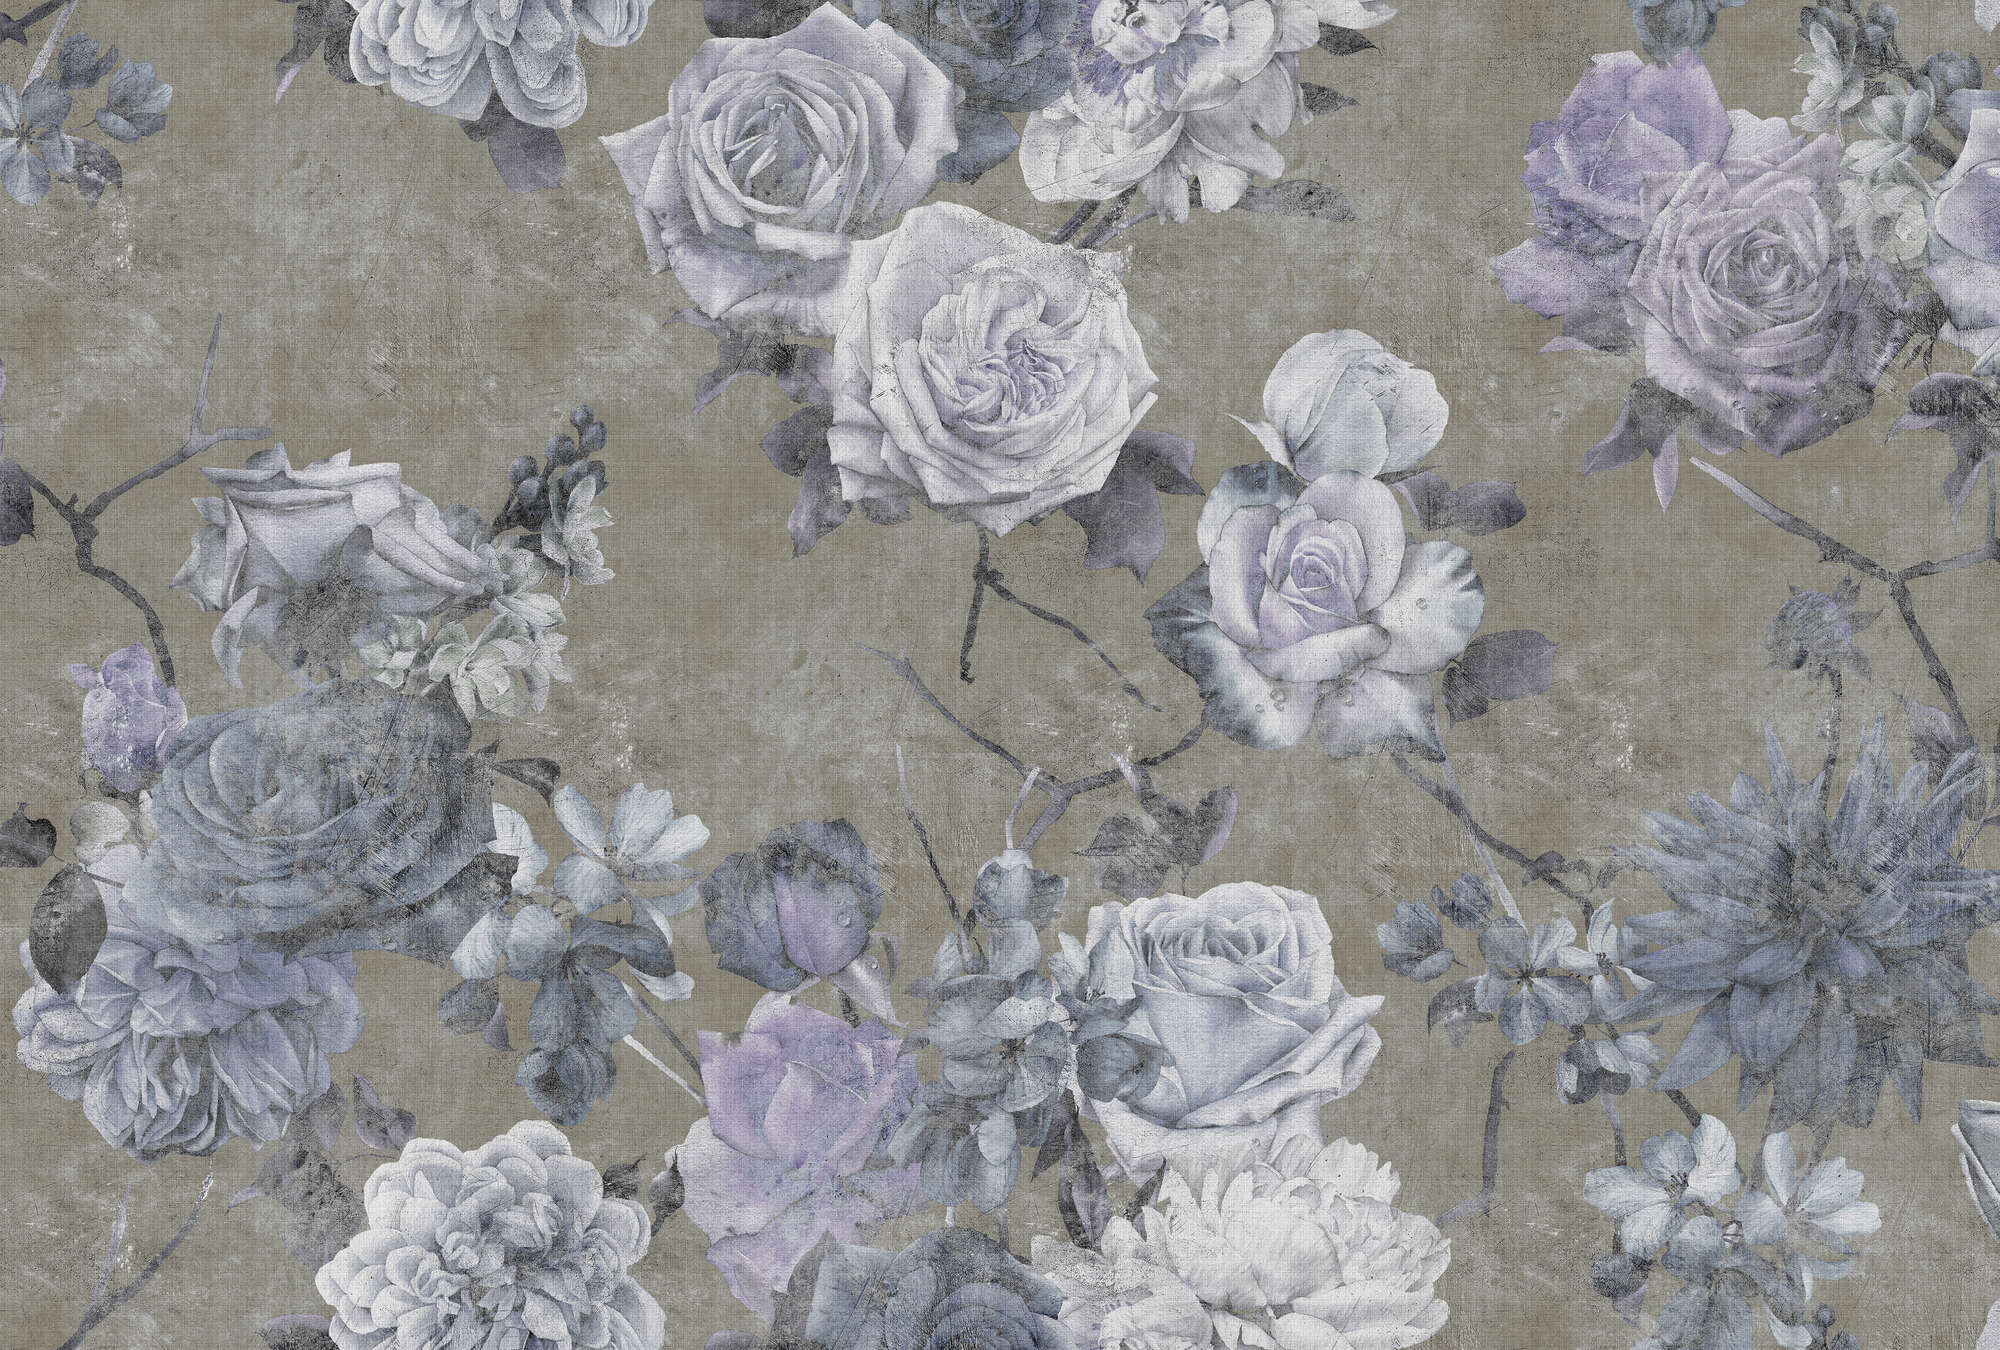             Sleeping Beauty 1 - Carta da parati in lino naturale struttura a fiori di rosa in look used - blu, taupe | madreperla smooth fleece
        